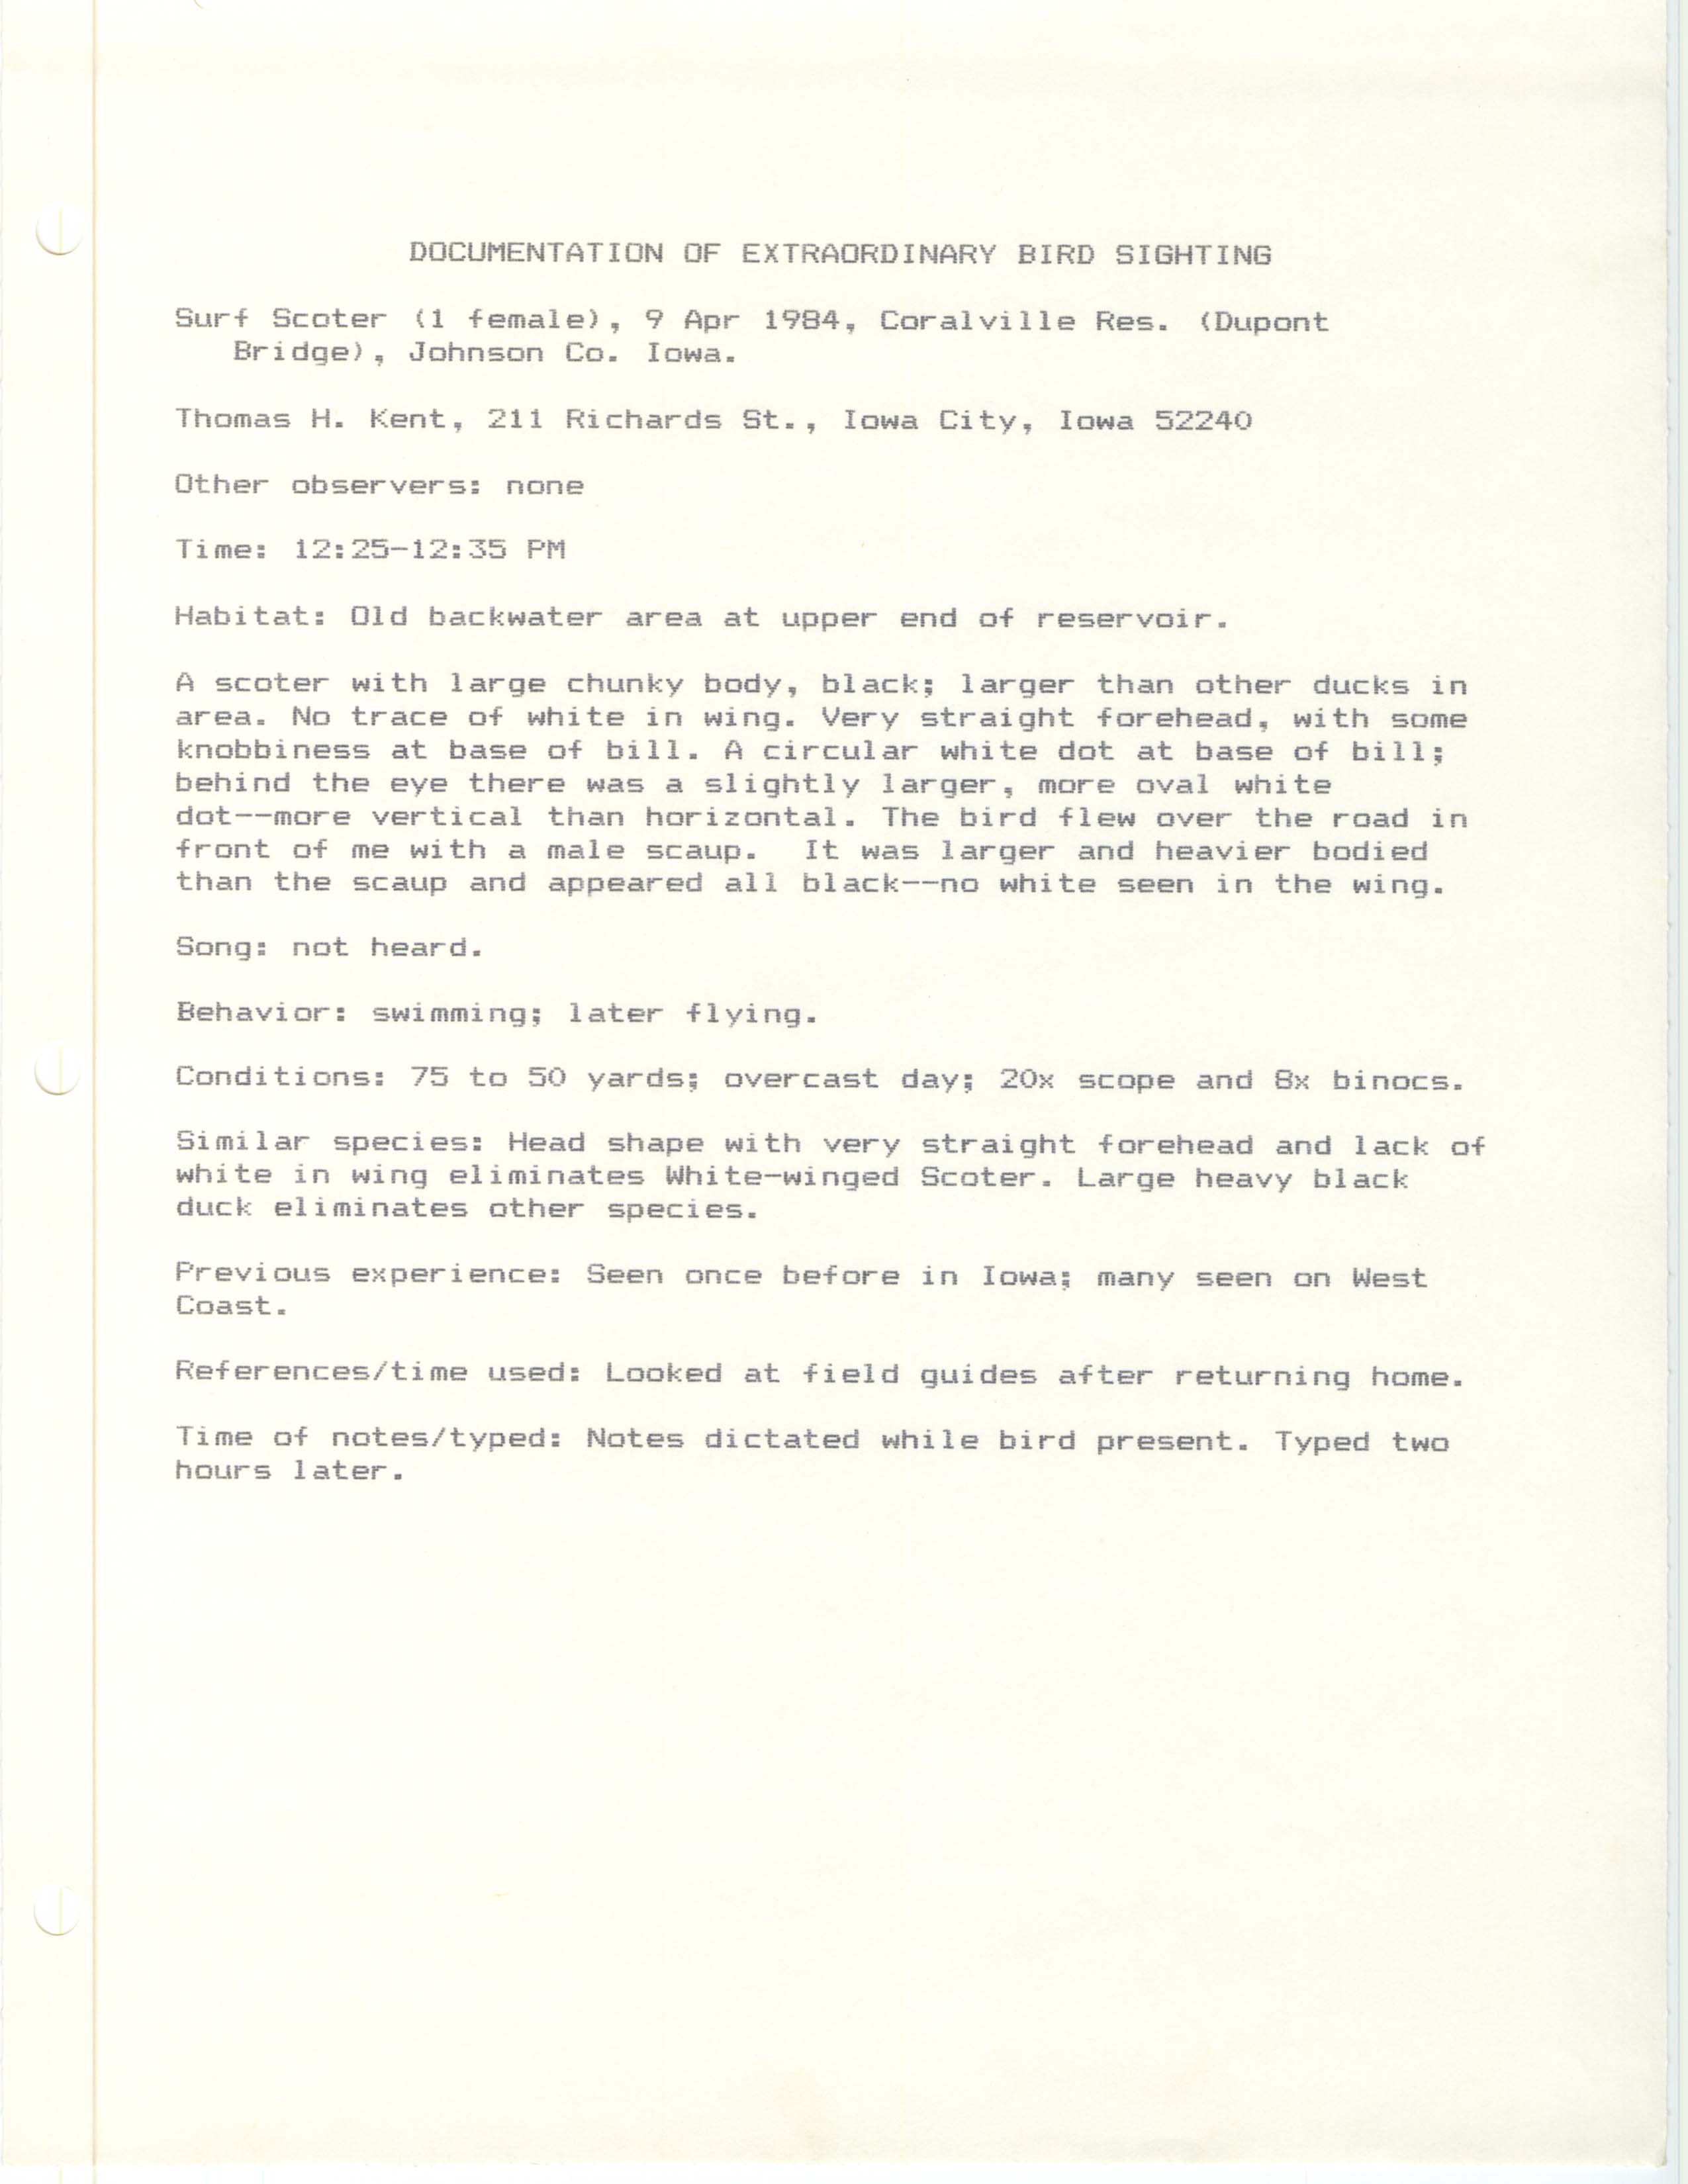 Rare bird documentation form for Surf Scoter at Coralville Reservoir, 1984